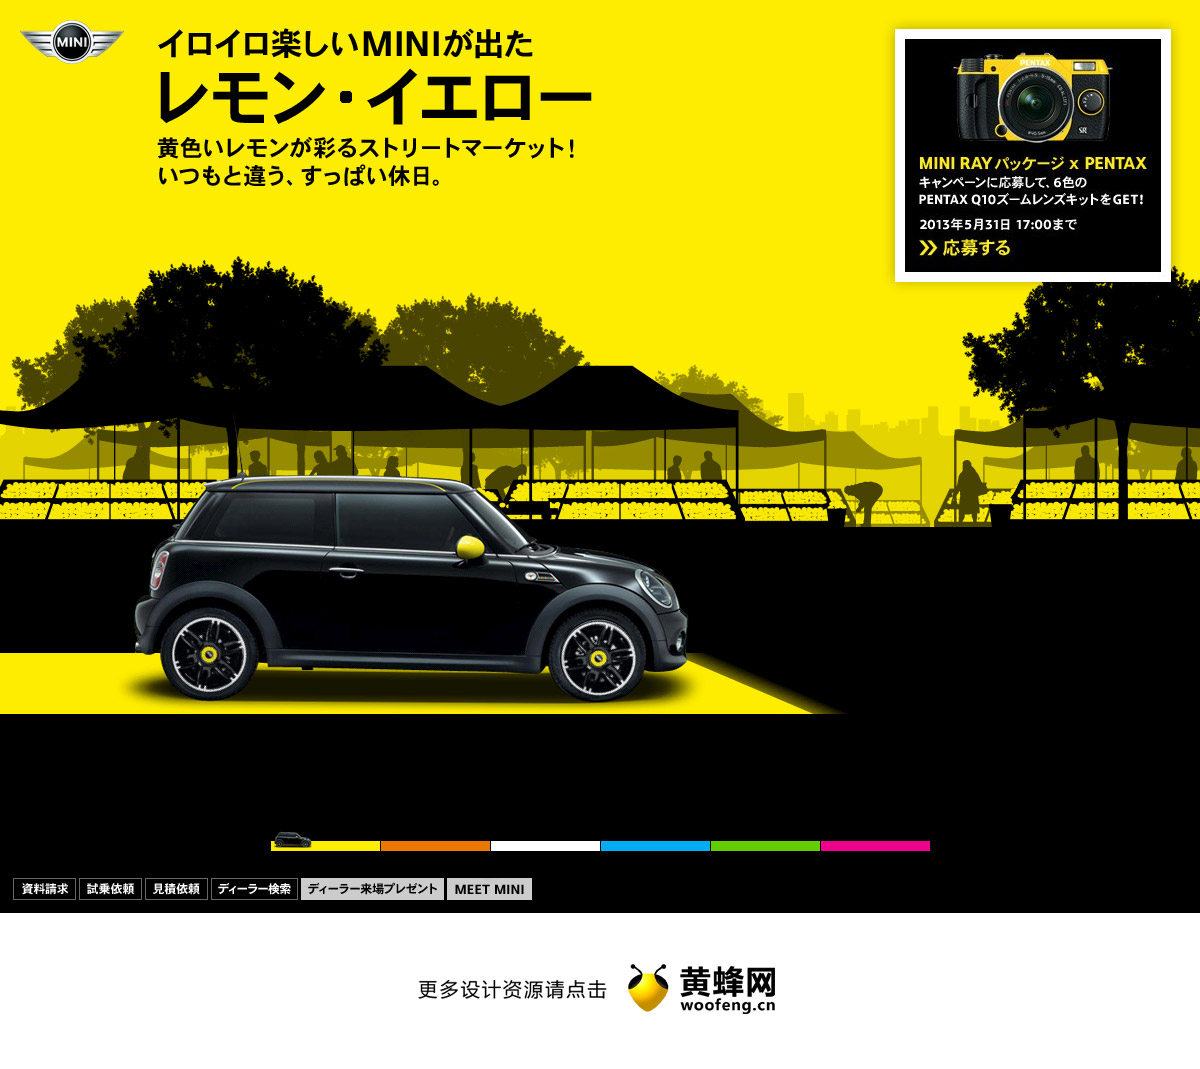 MINI日本 - MINI RAY包装生命的颜色。来源自黄蜂网https://woofeng.cn/web/